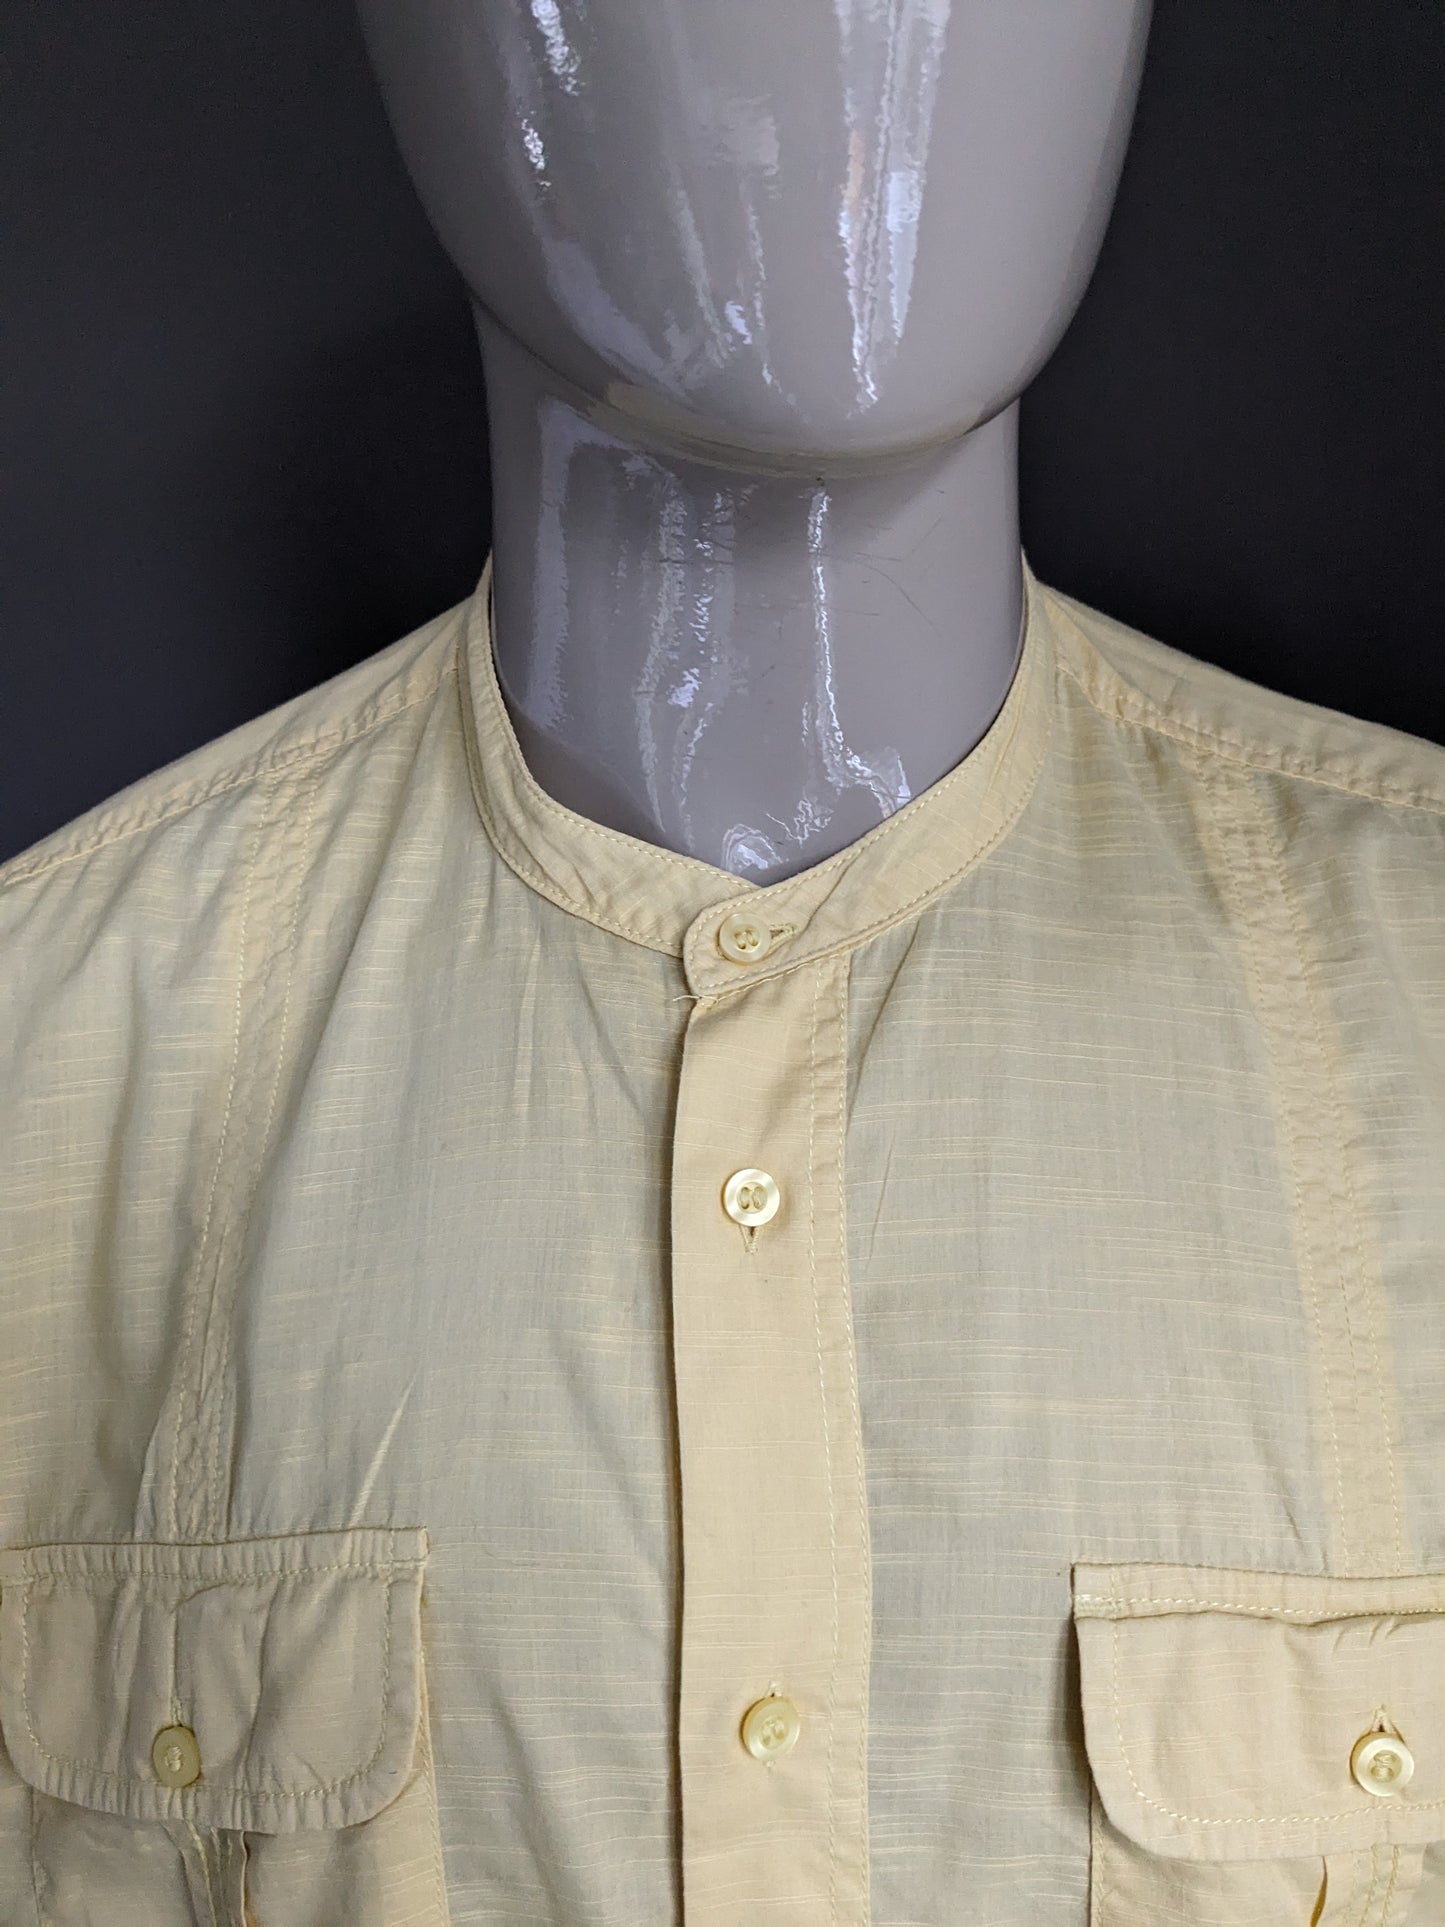 Sleeve corta vintage Angelo Litrico Motivo giallo. Taglia XL.